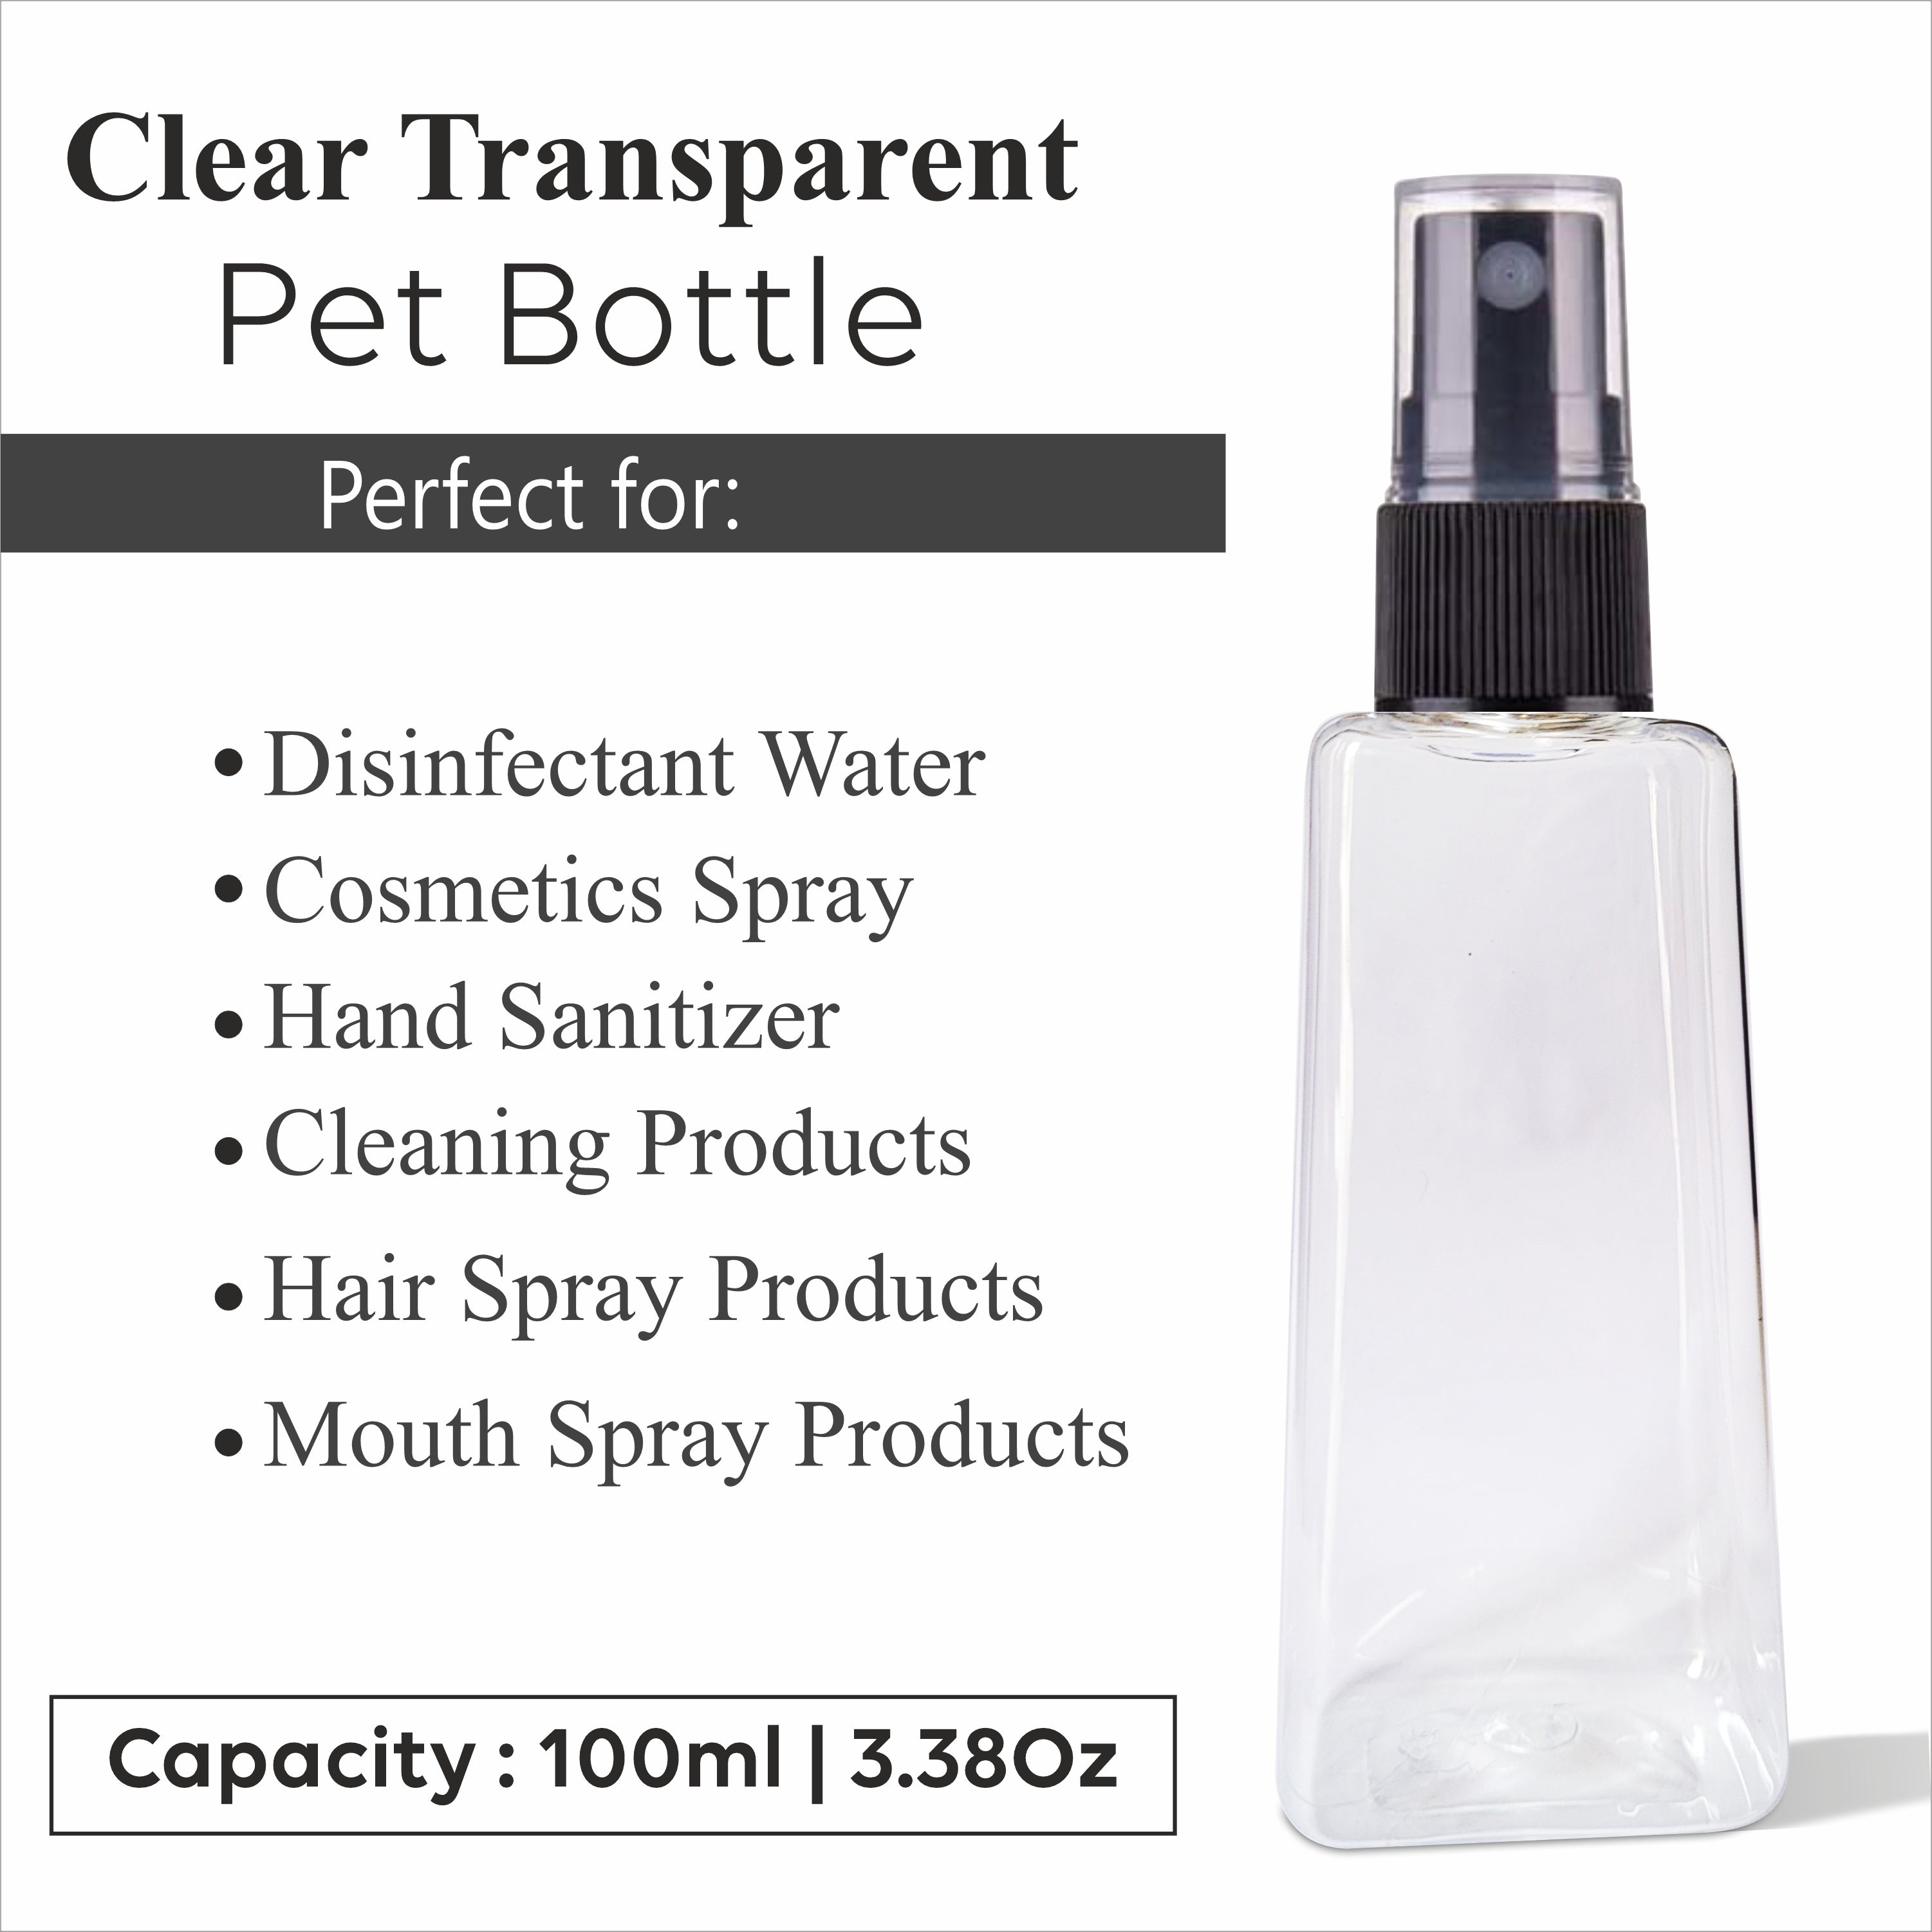 Pyramid Shape Clear Transparent Pet Bottle With Black Mist Spray Pump 100ml [ZMT88]